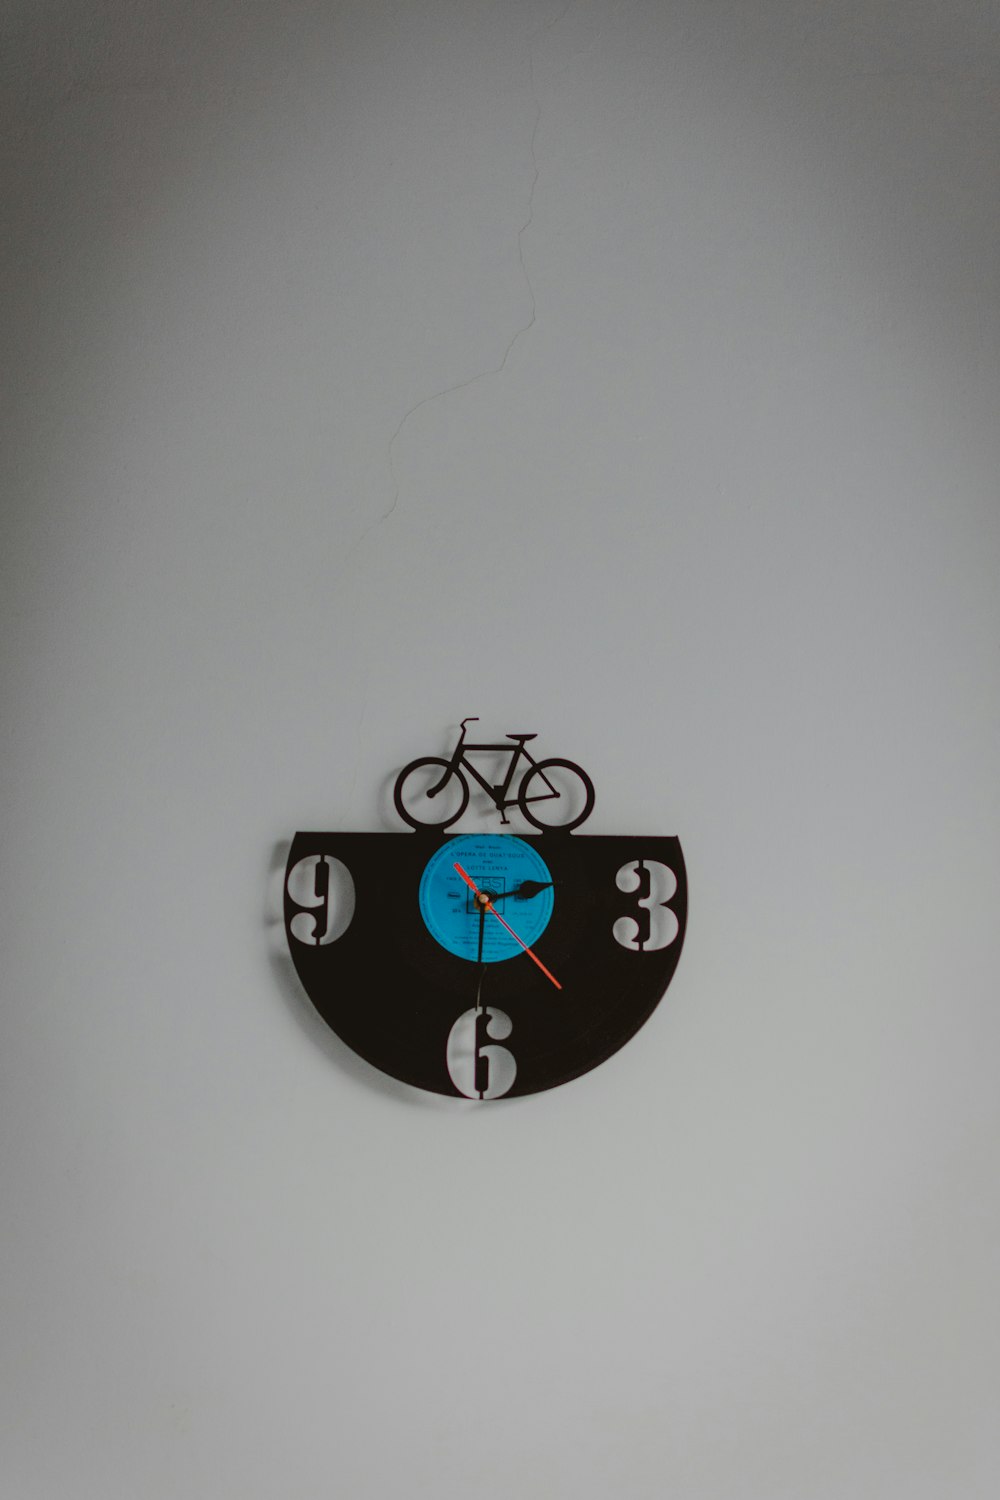 black and blue bike-themed analog wall clock displaying 3:30 time